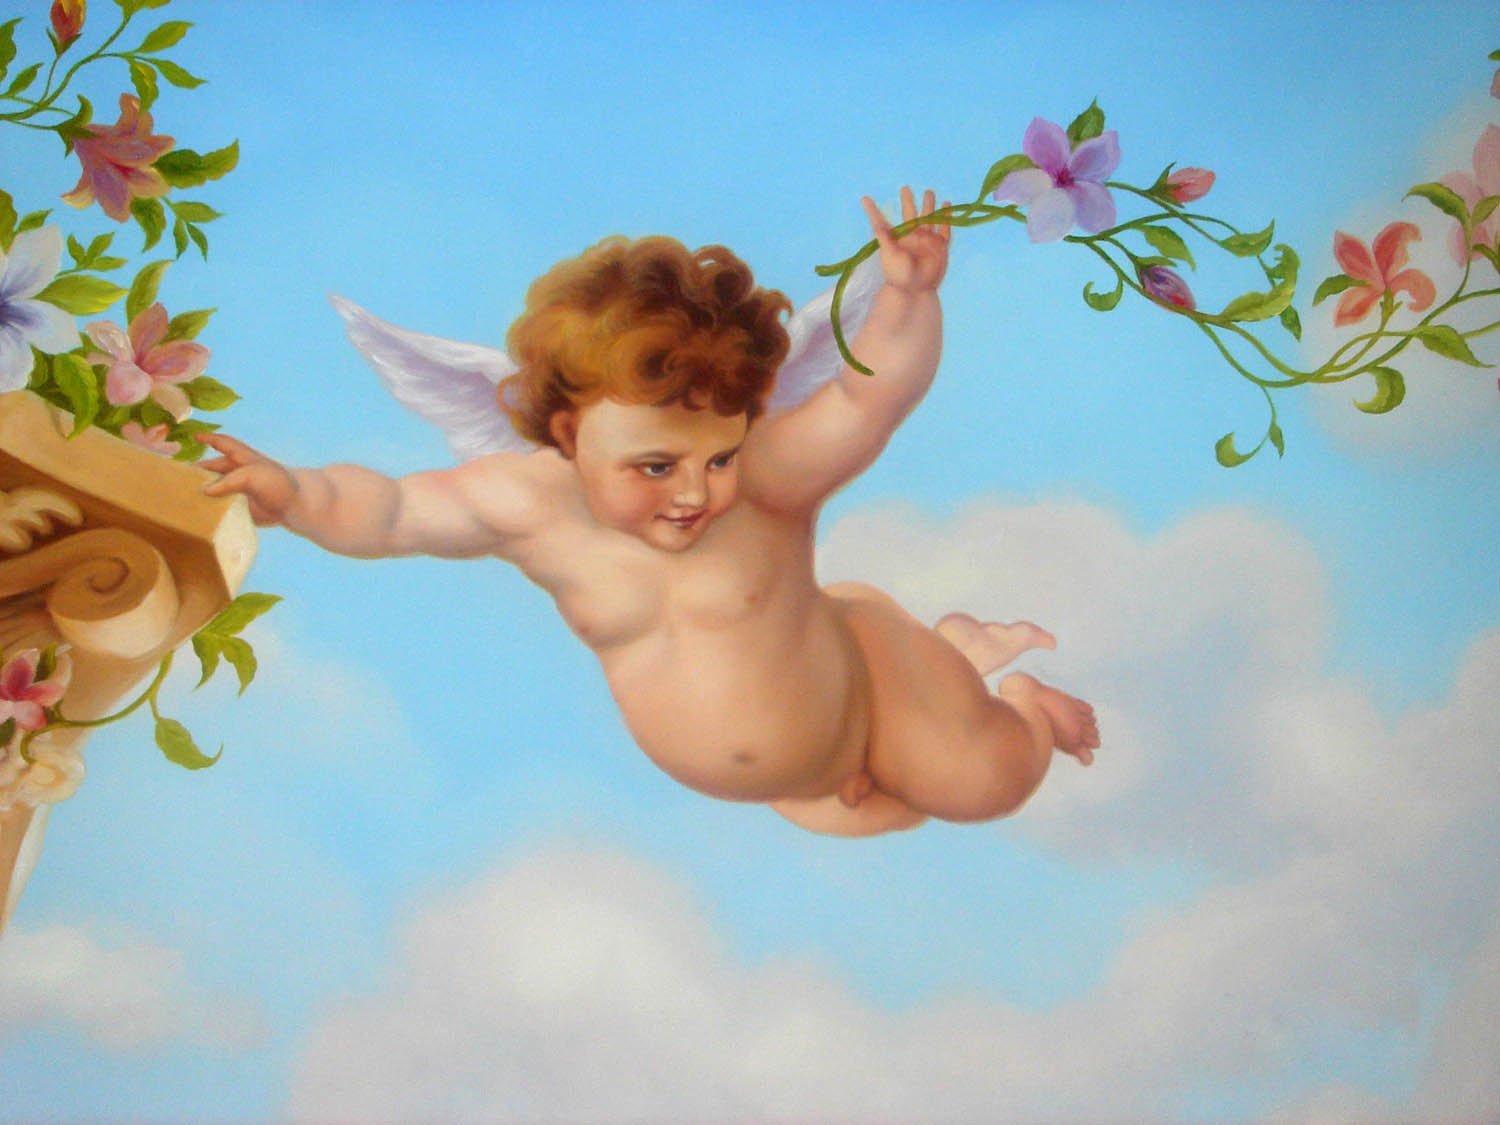 Little angel на русском языке. Ангелочки в облаках. Летающие ангелочки. Ангел фреска. Картина ангел.